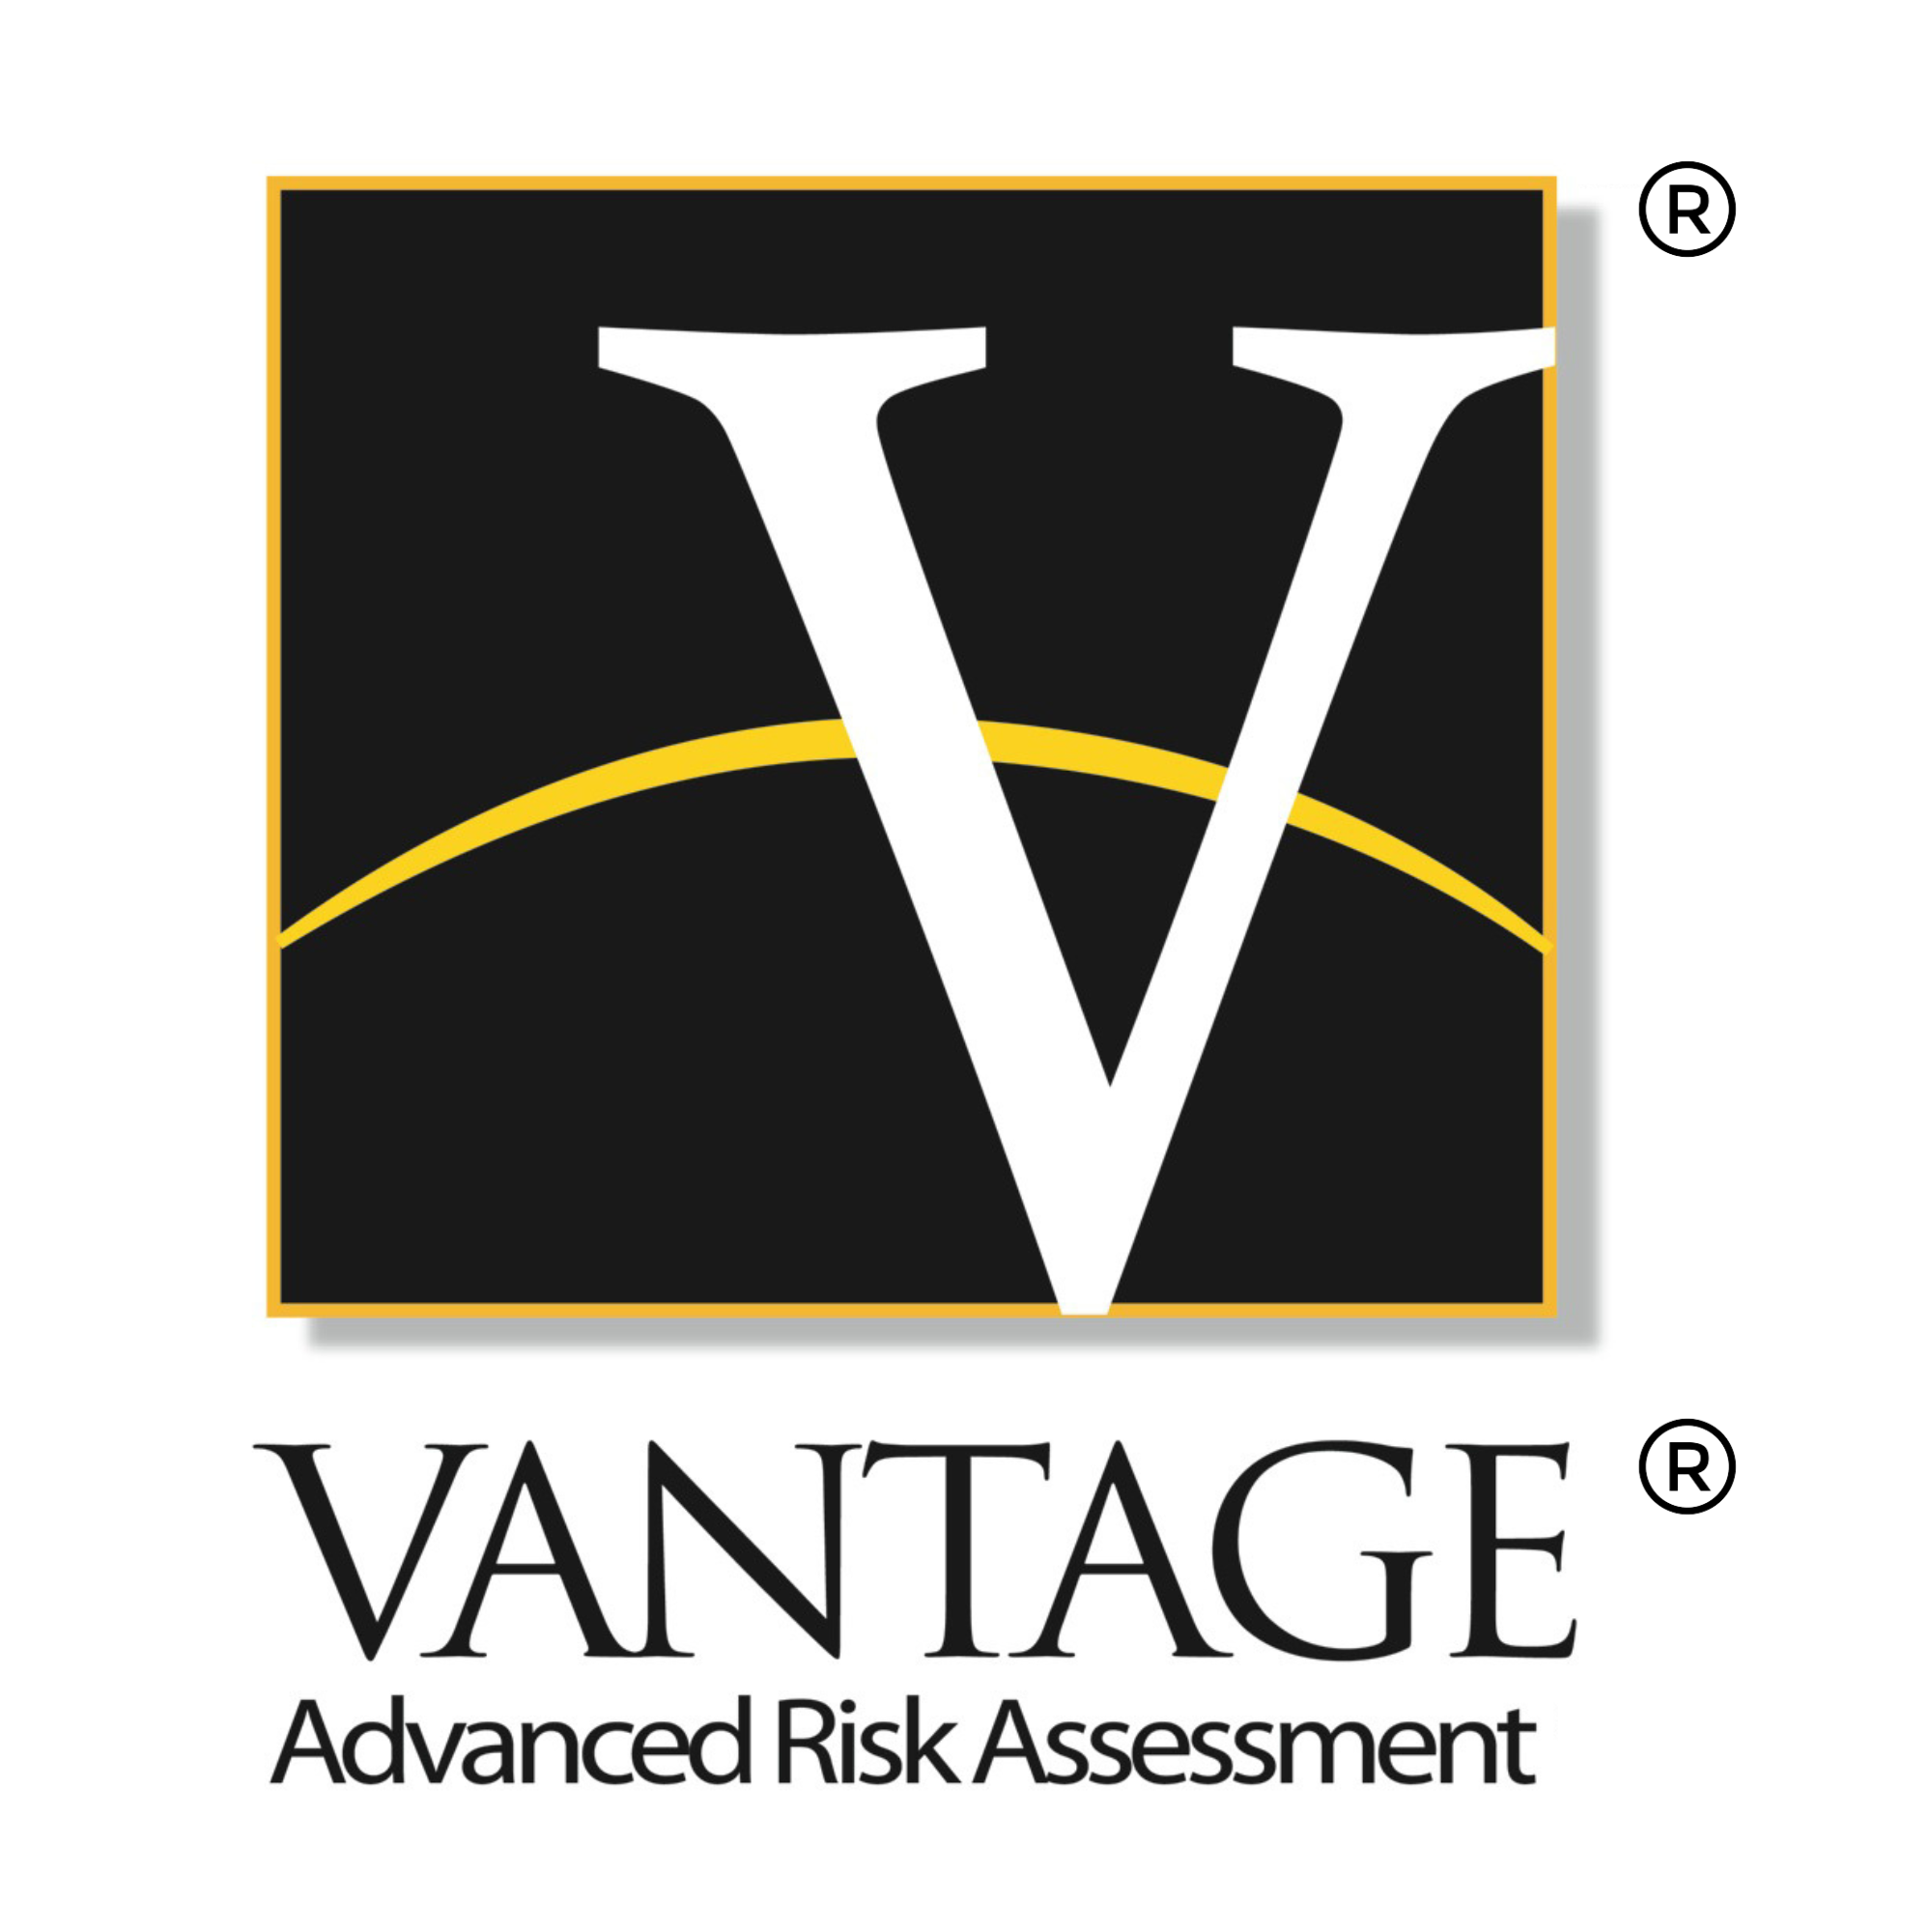 Vantage Advanced Risk Assessment logo